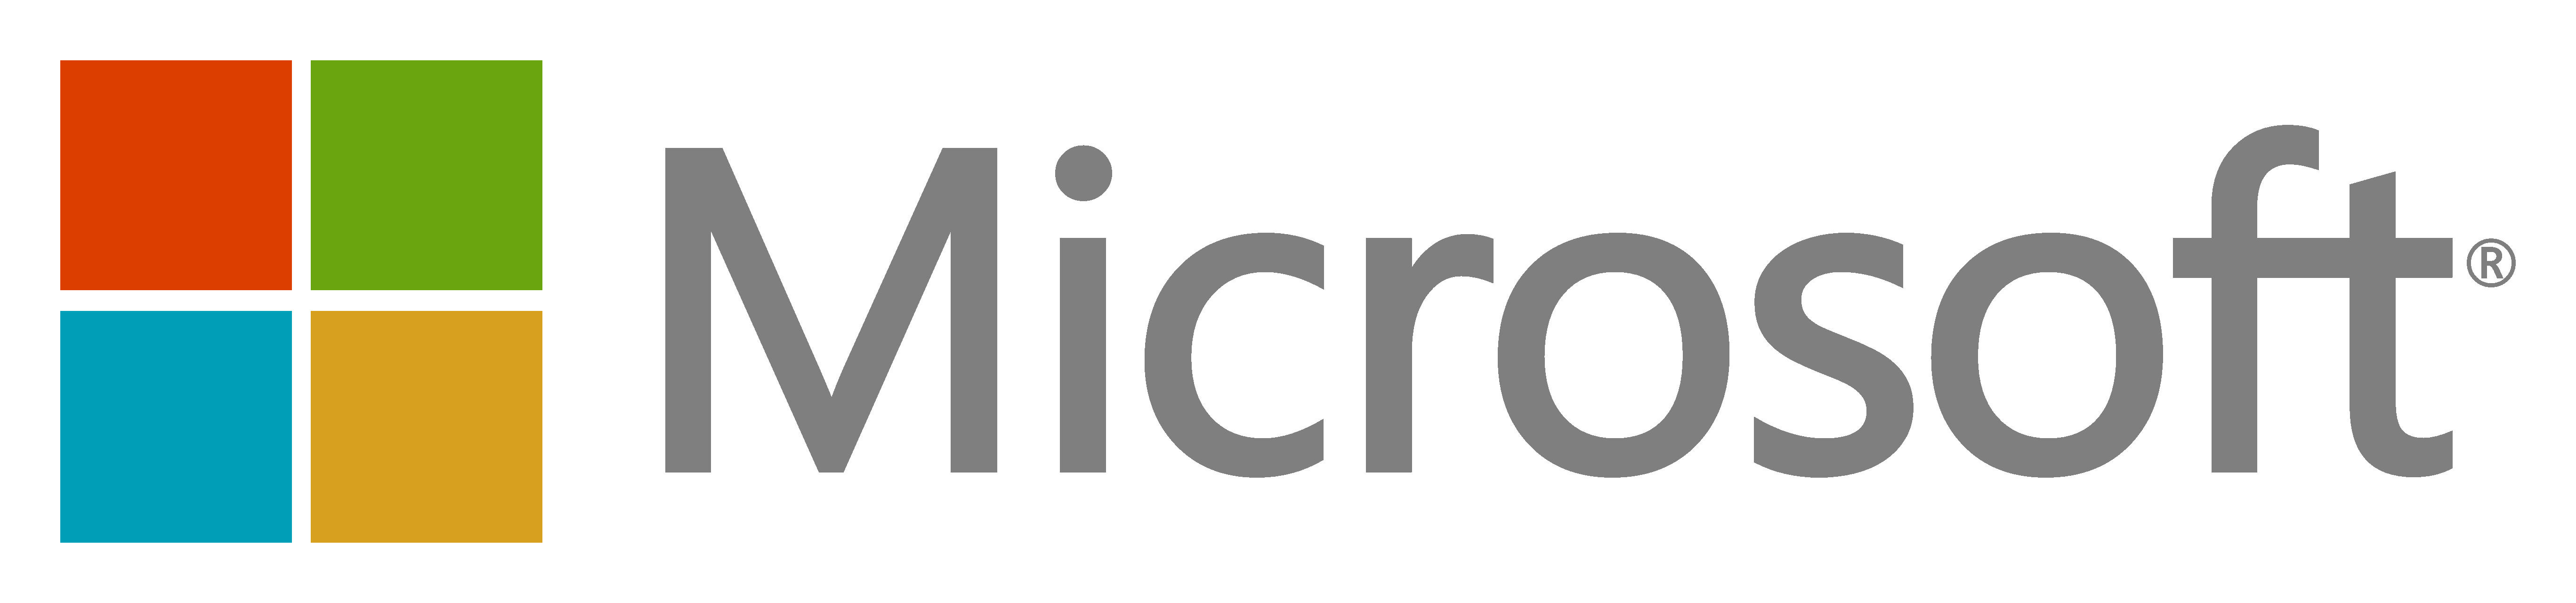 Microsoft logo PNG, Microsoft PNG - Free PNG